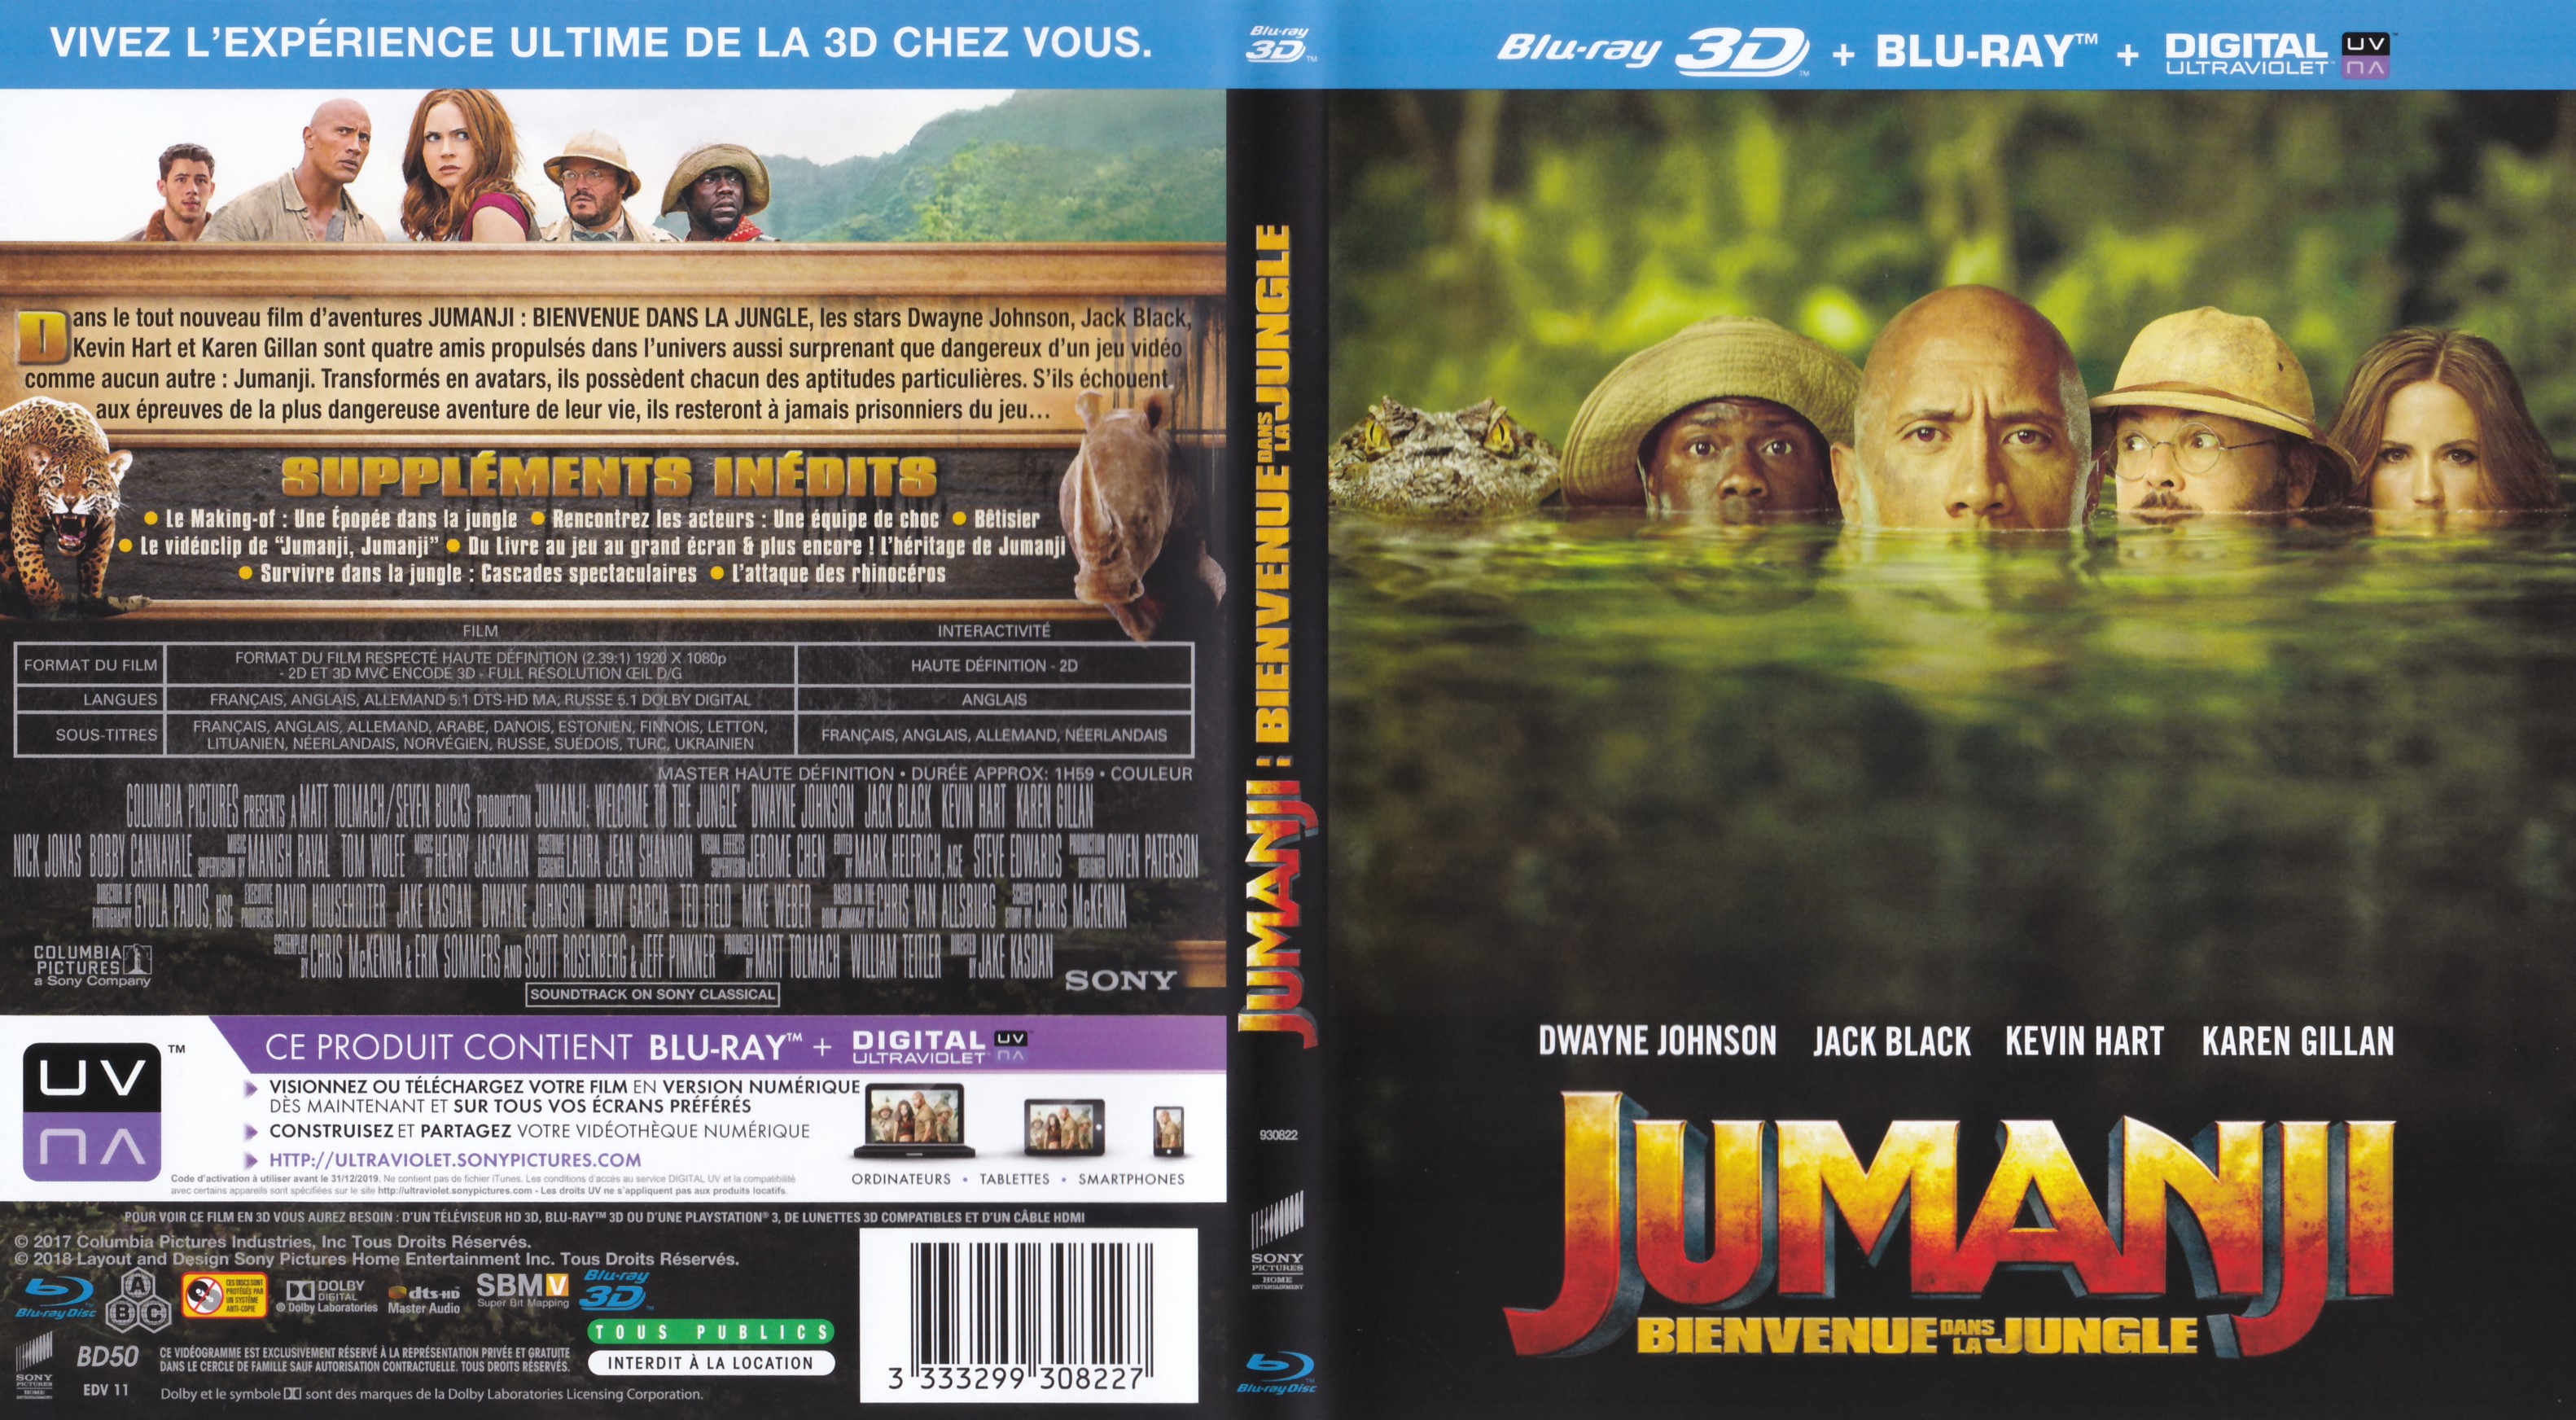 Jaquette DVD Jumanji bienvenue dans la jungle (BLU-RAY)